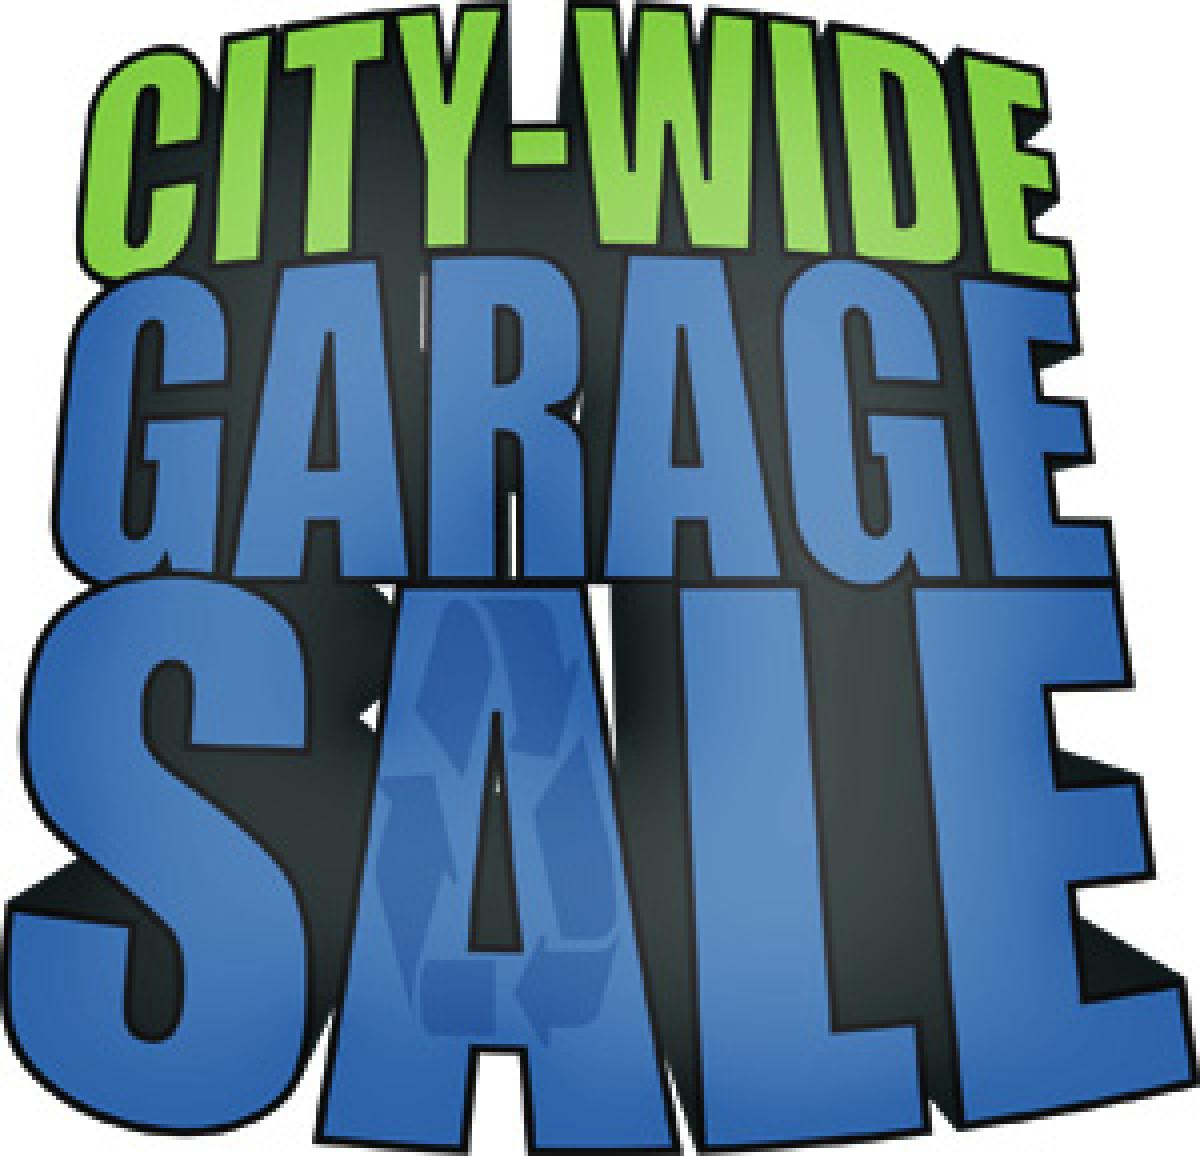 2018 City Wide Garage Sale City of Grove Oklahoma